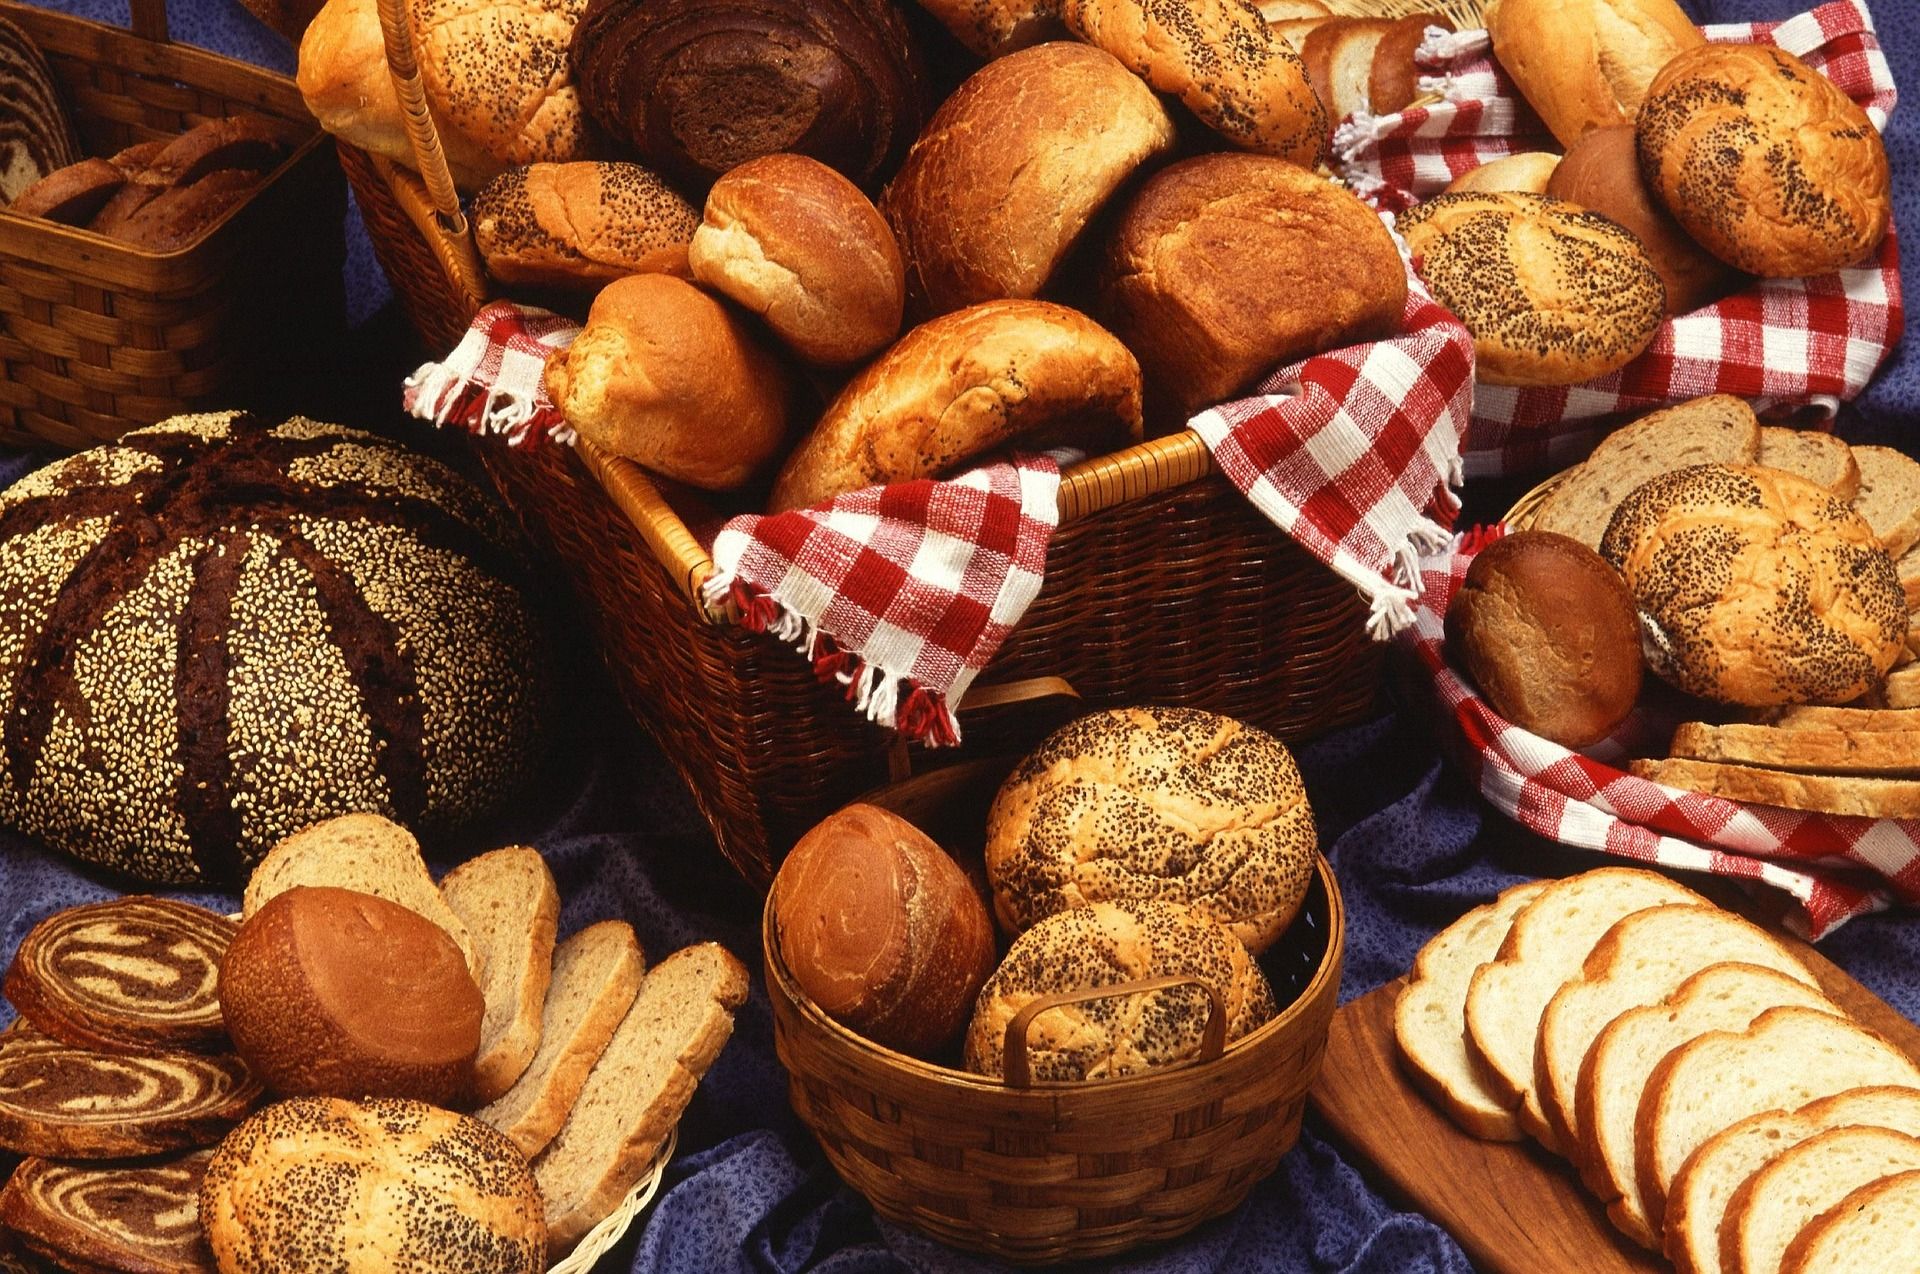 Traditonal Grain-Based Breads